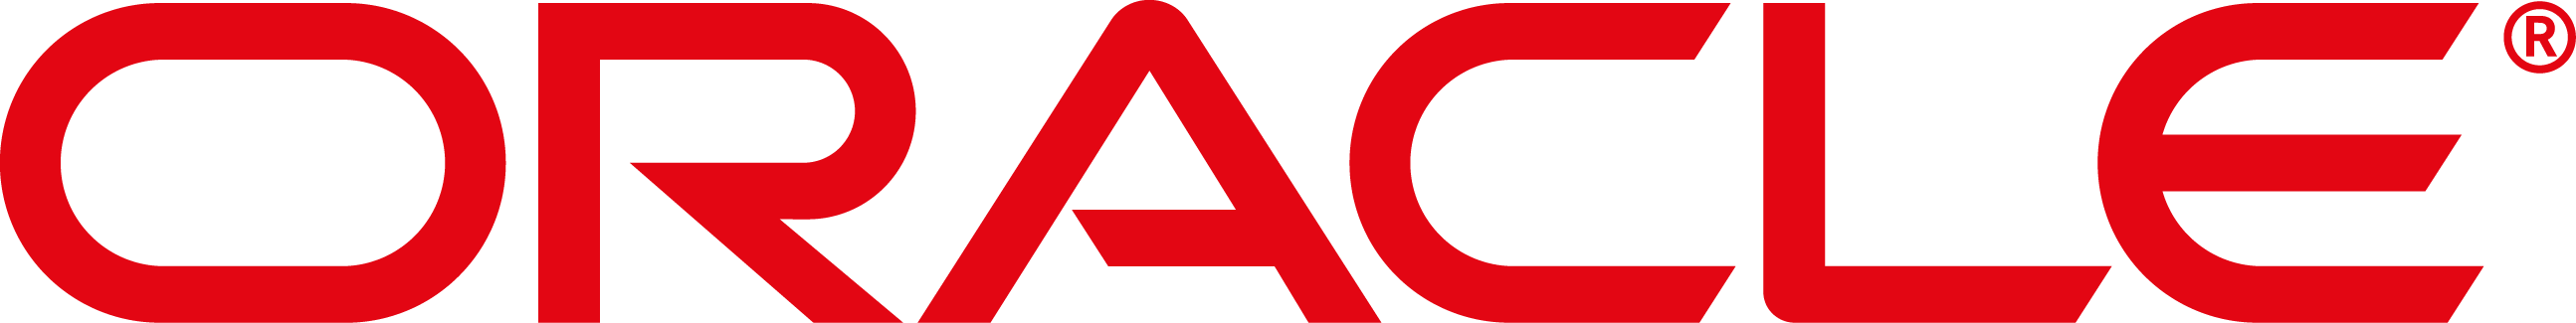 Oracle Logo png